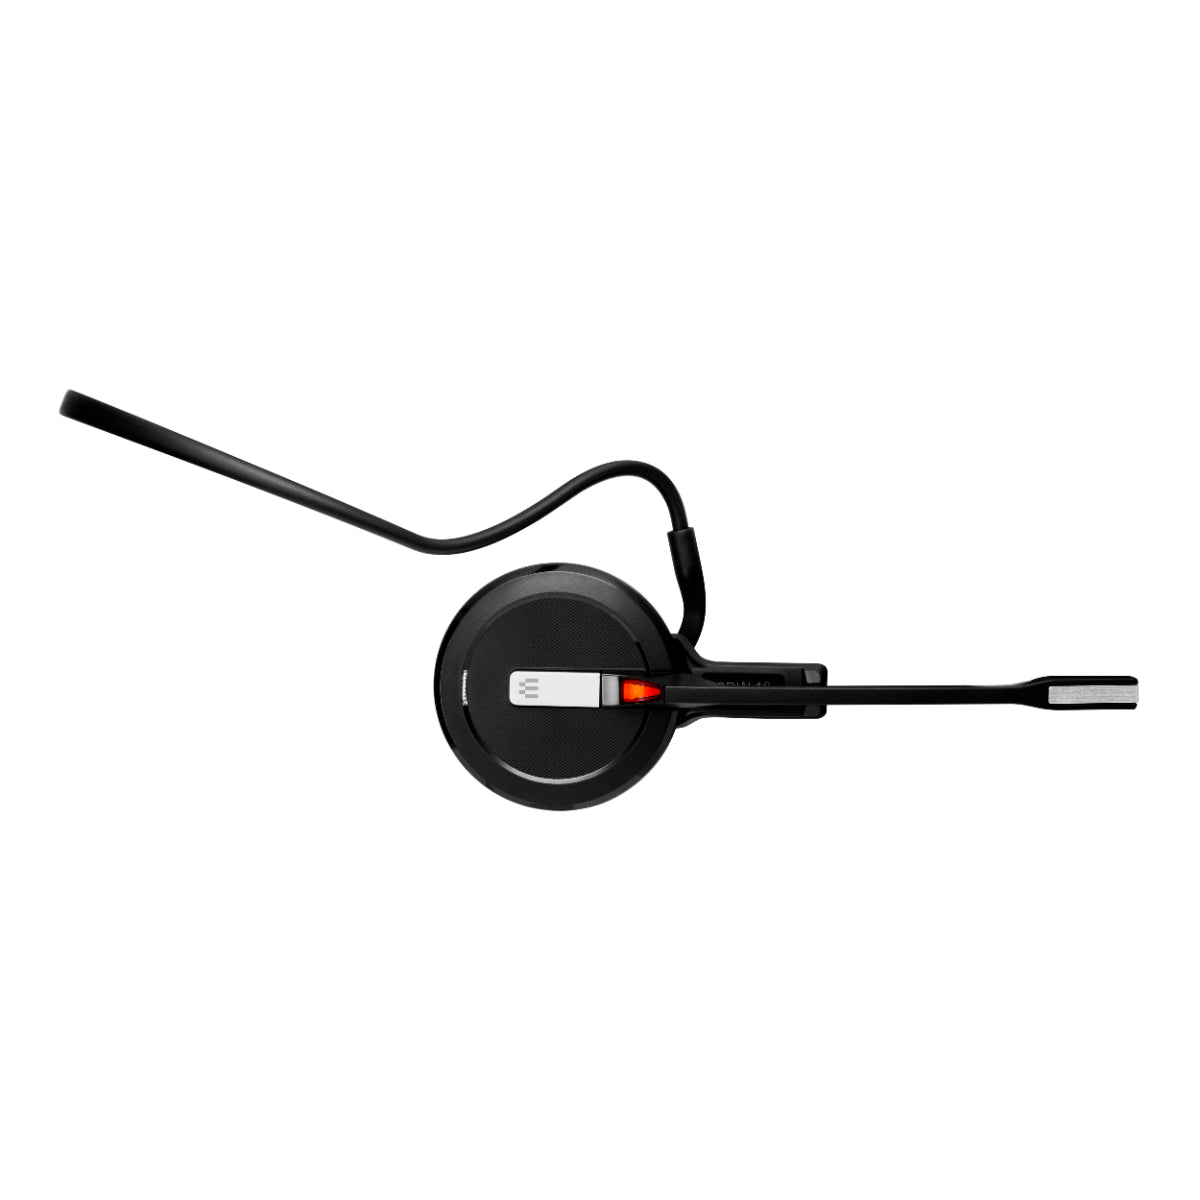 EPOS IMPACT SDW 5014 - EU Wireless Monaural DECT Headset, Black, With Dual Connectivity